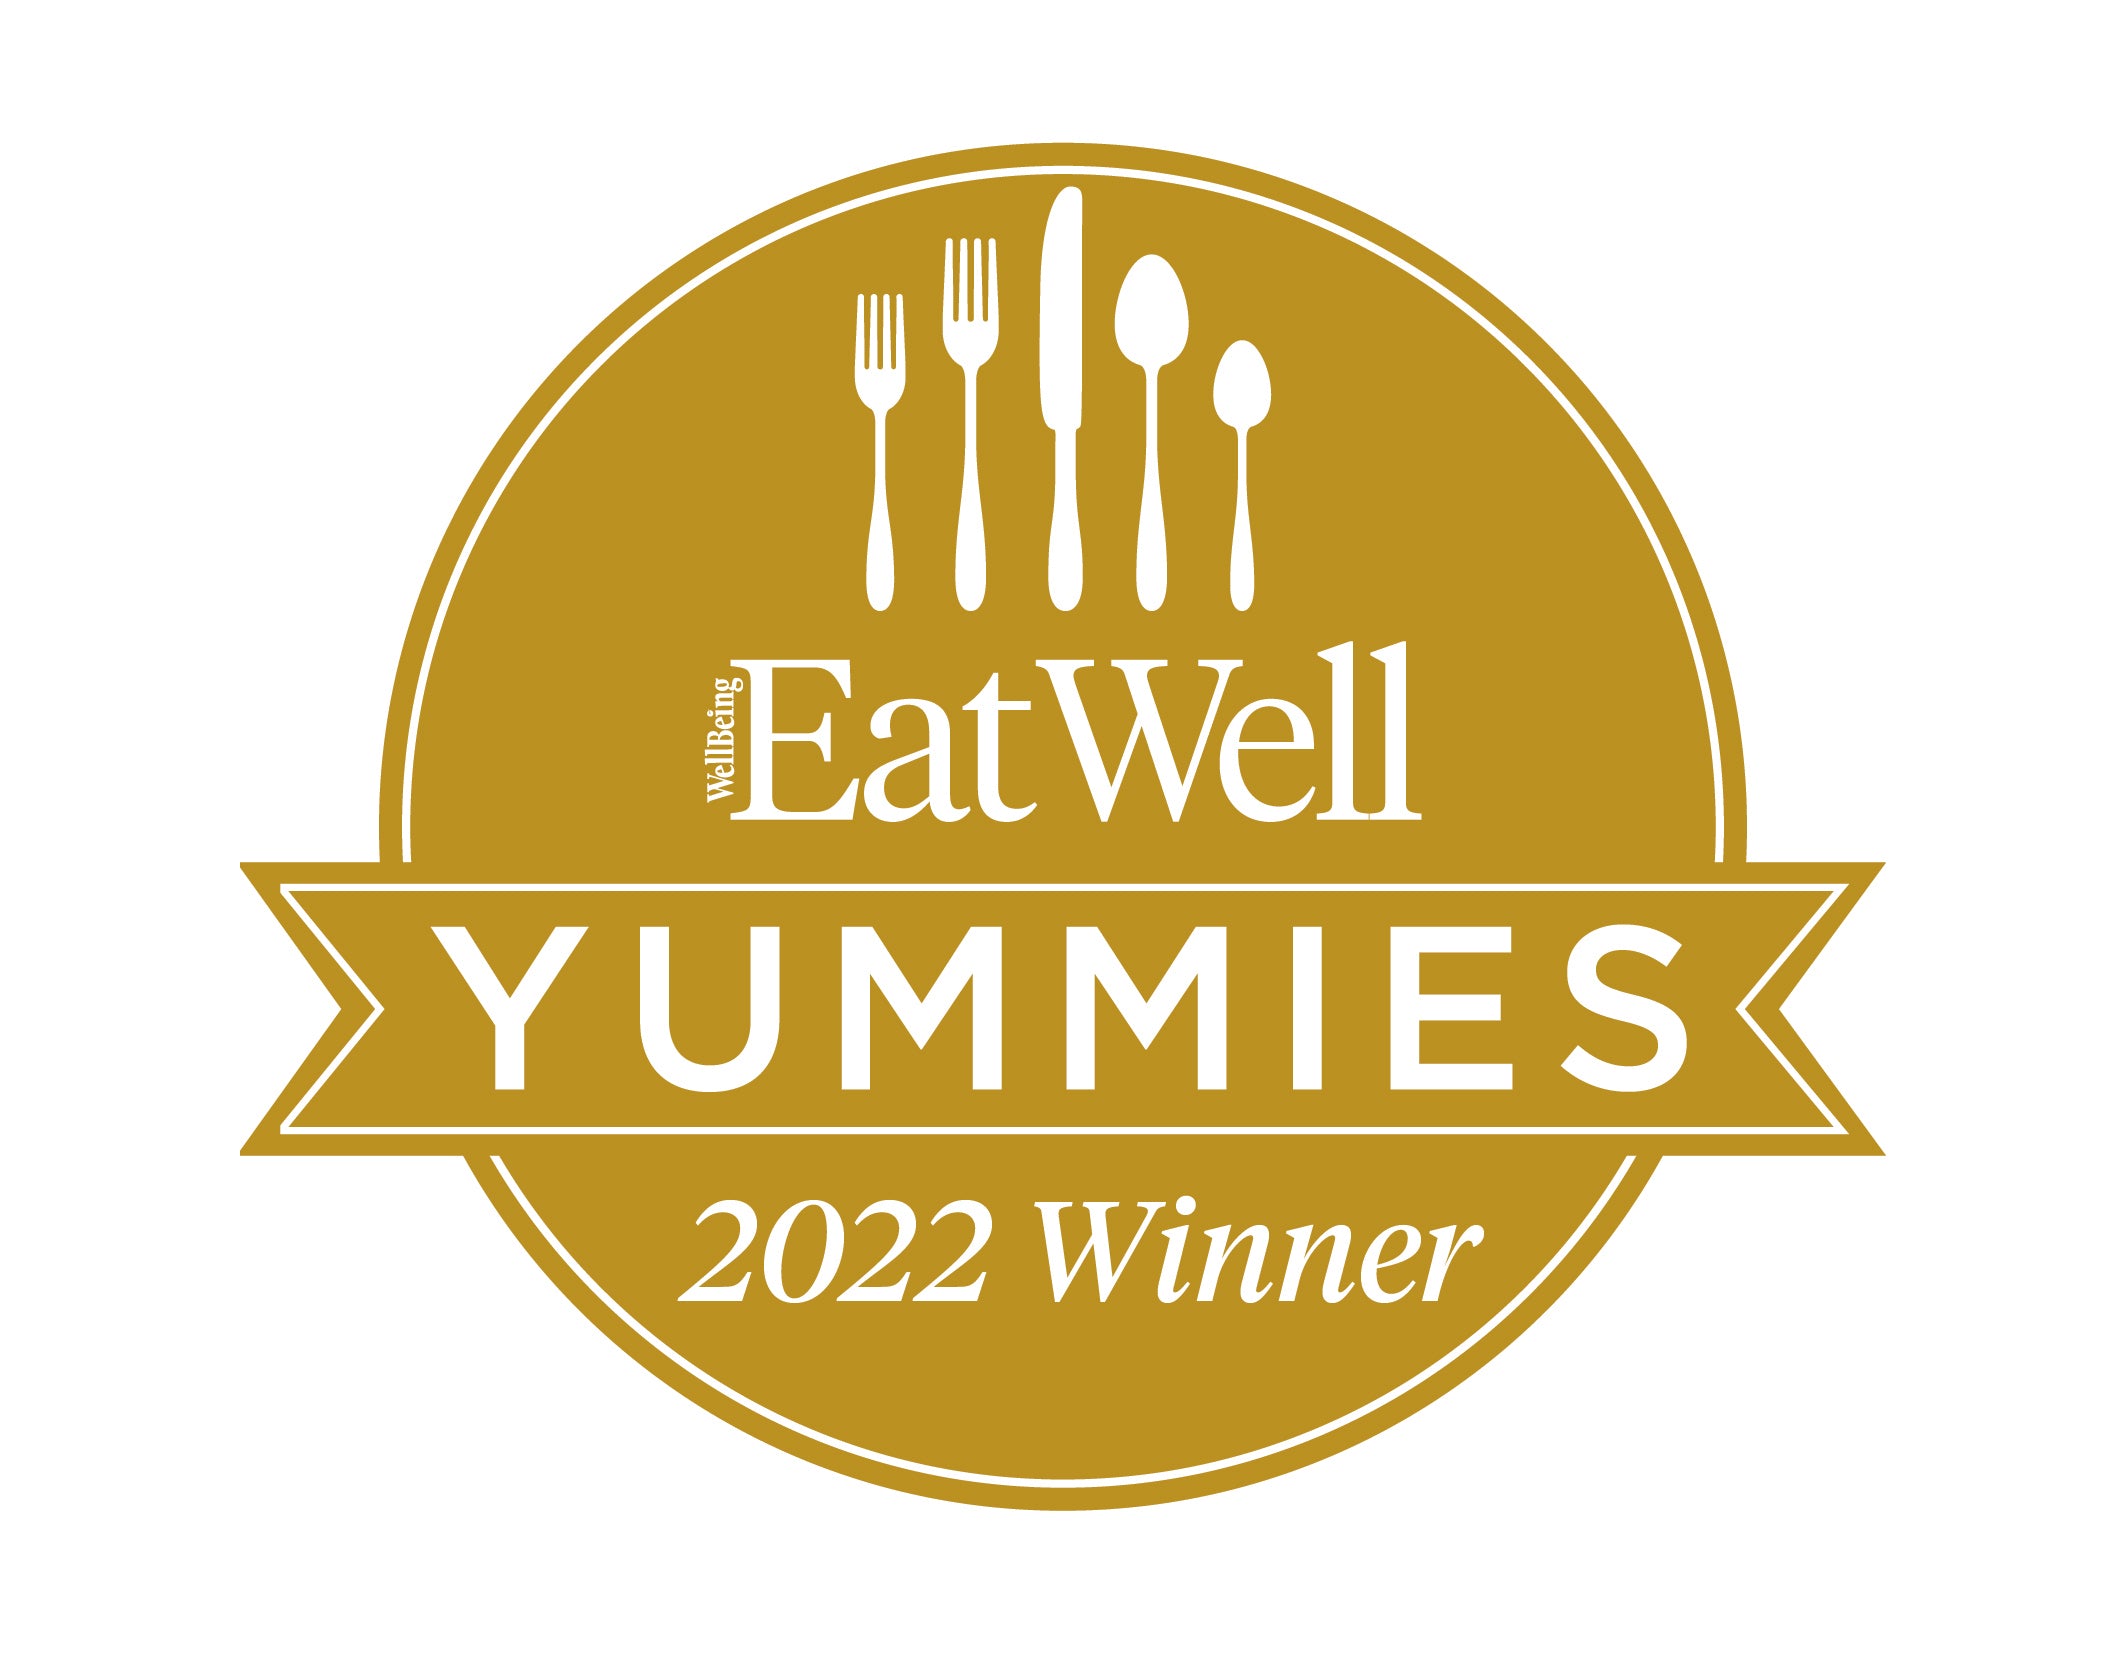 Yummies Award 2022